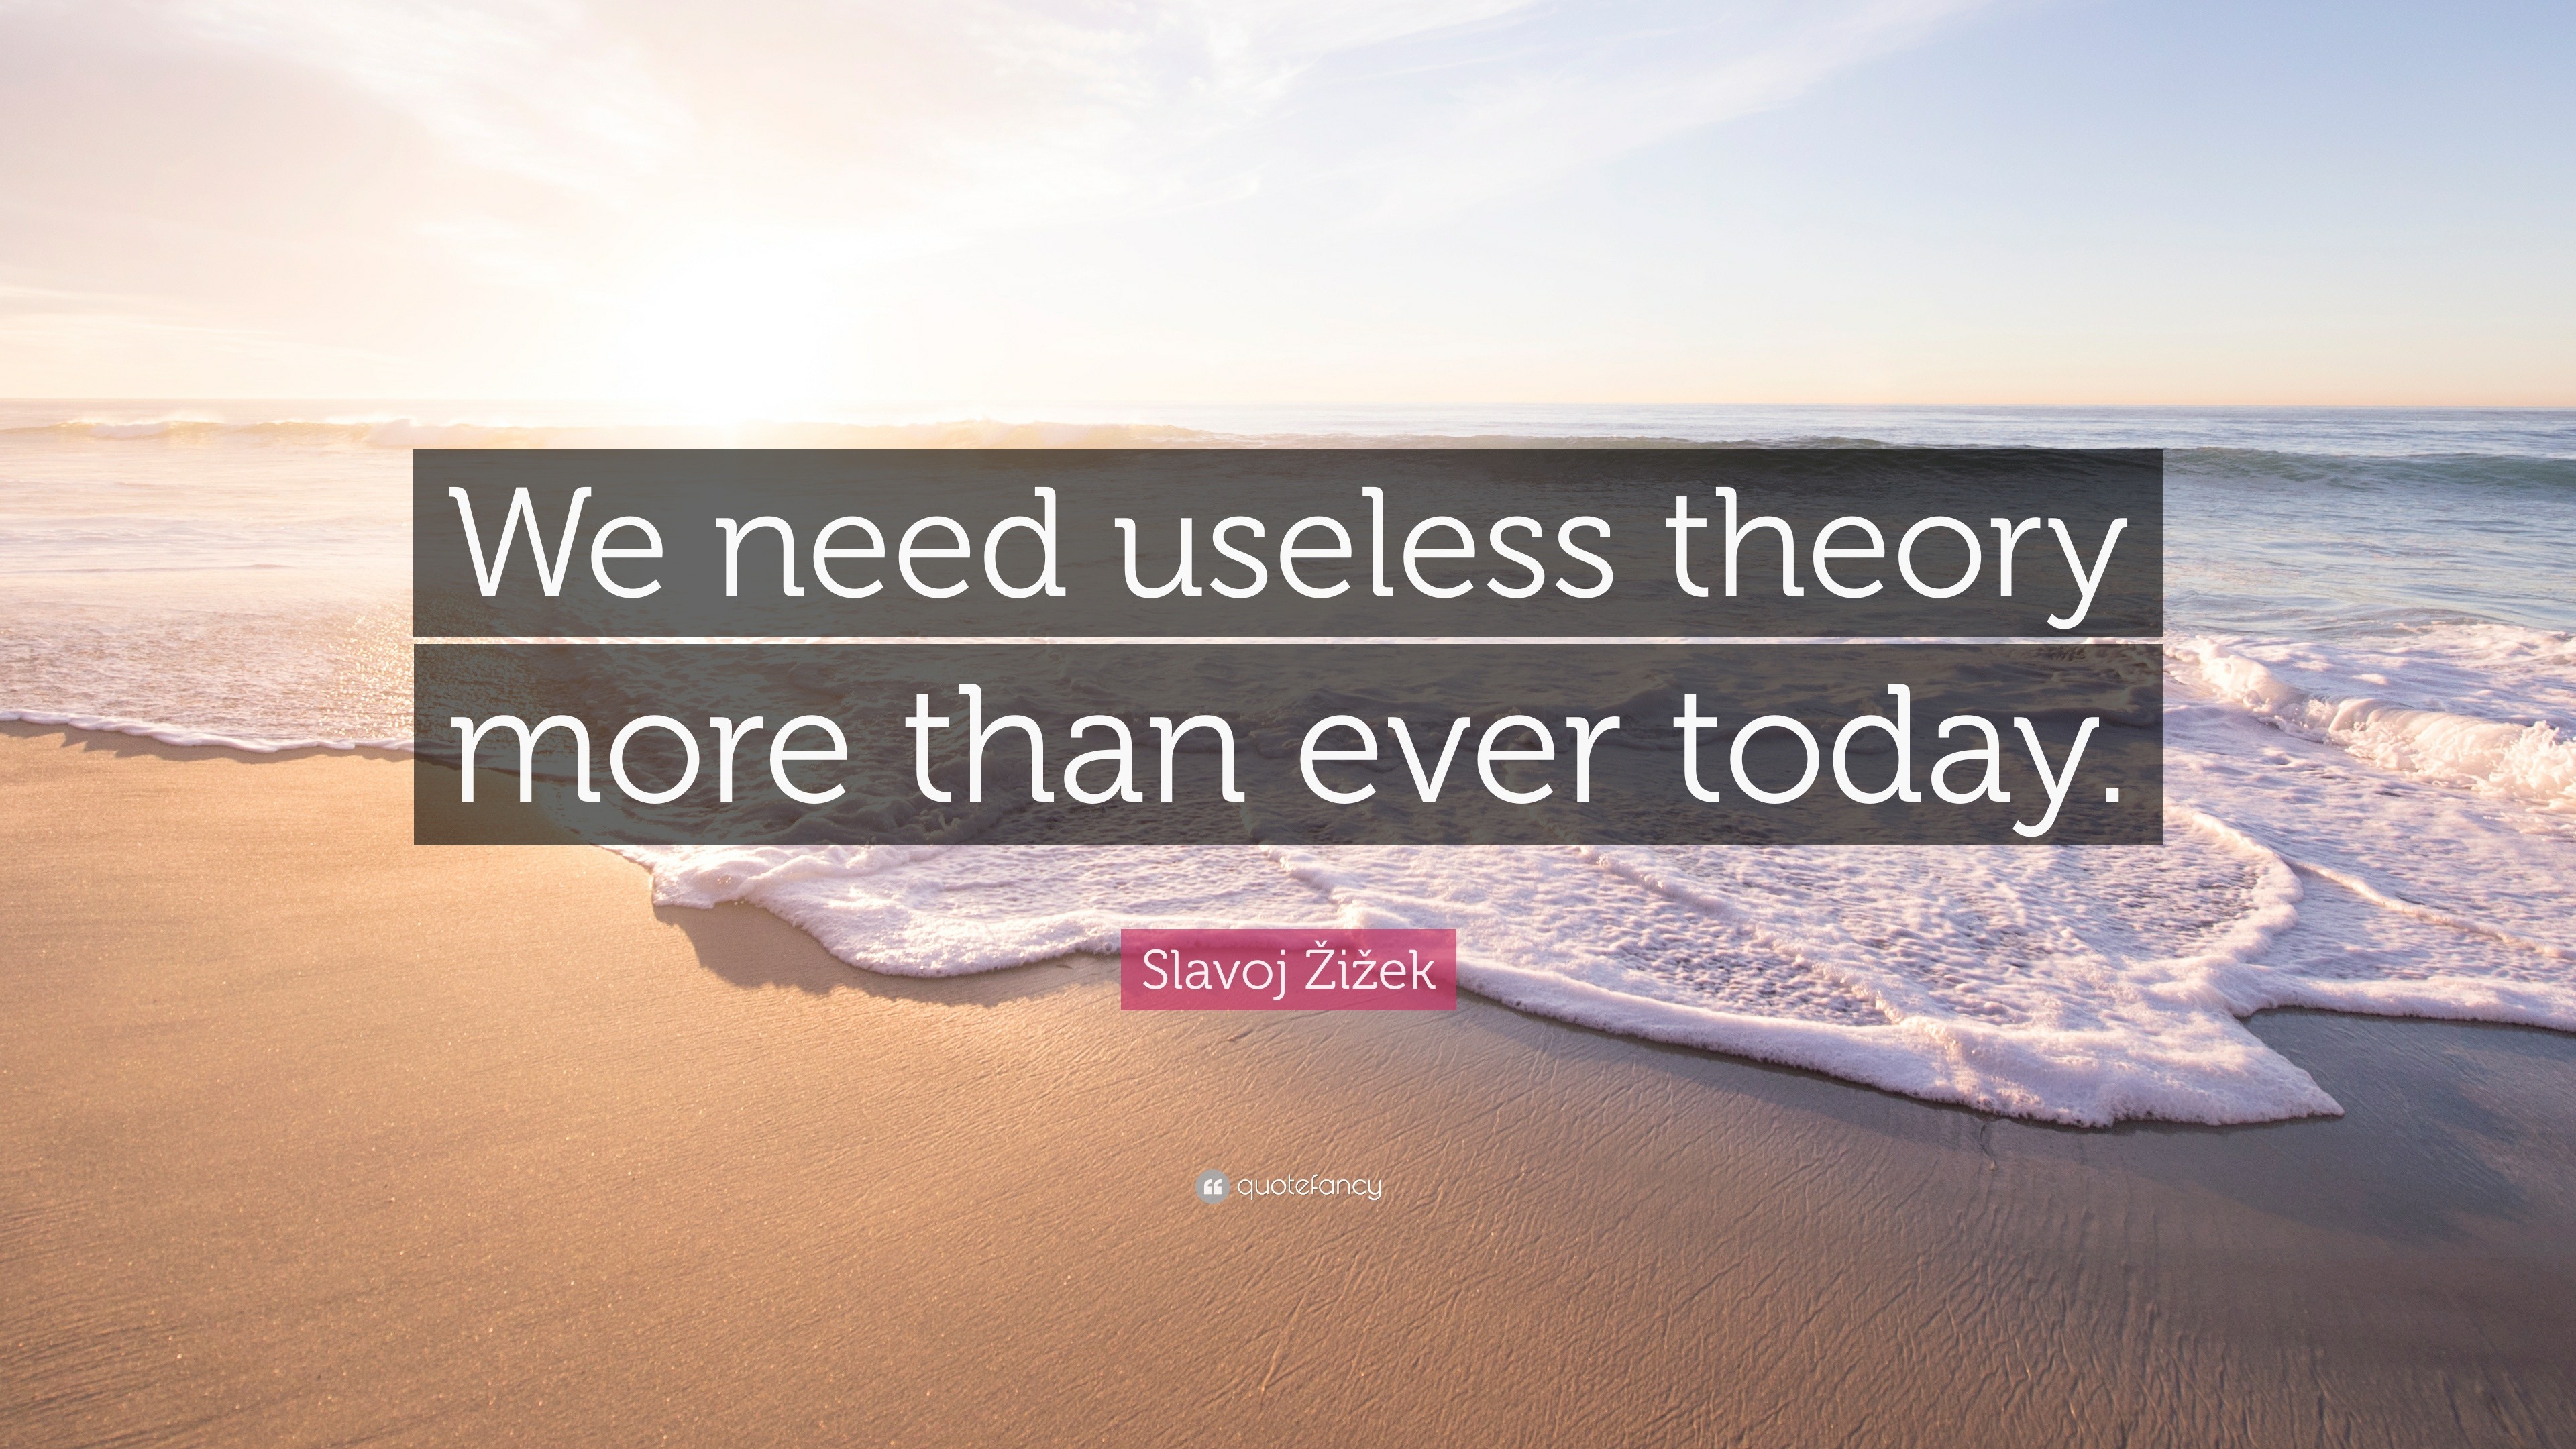 Slavoj Žižek Quote: “We need useless theory more than ever today.”